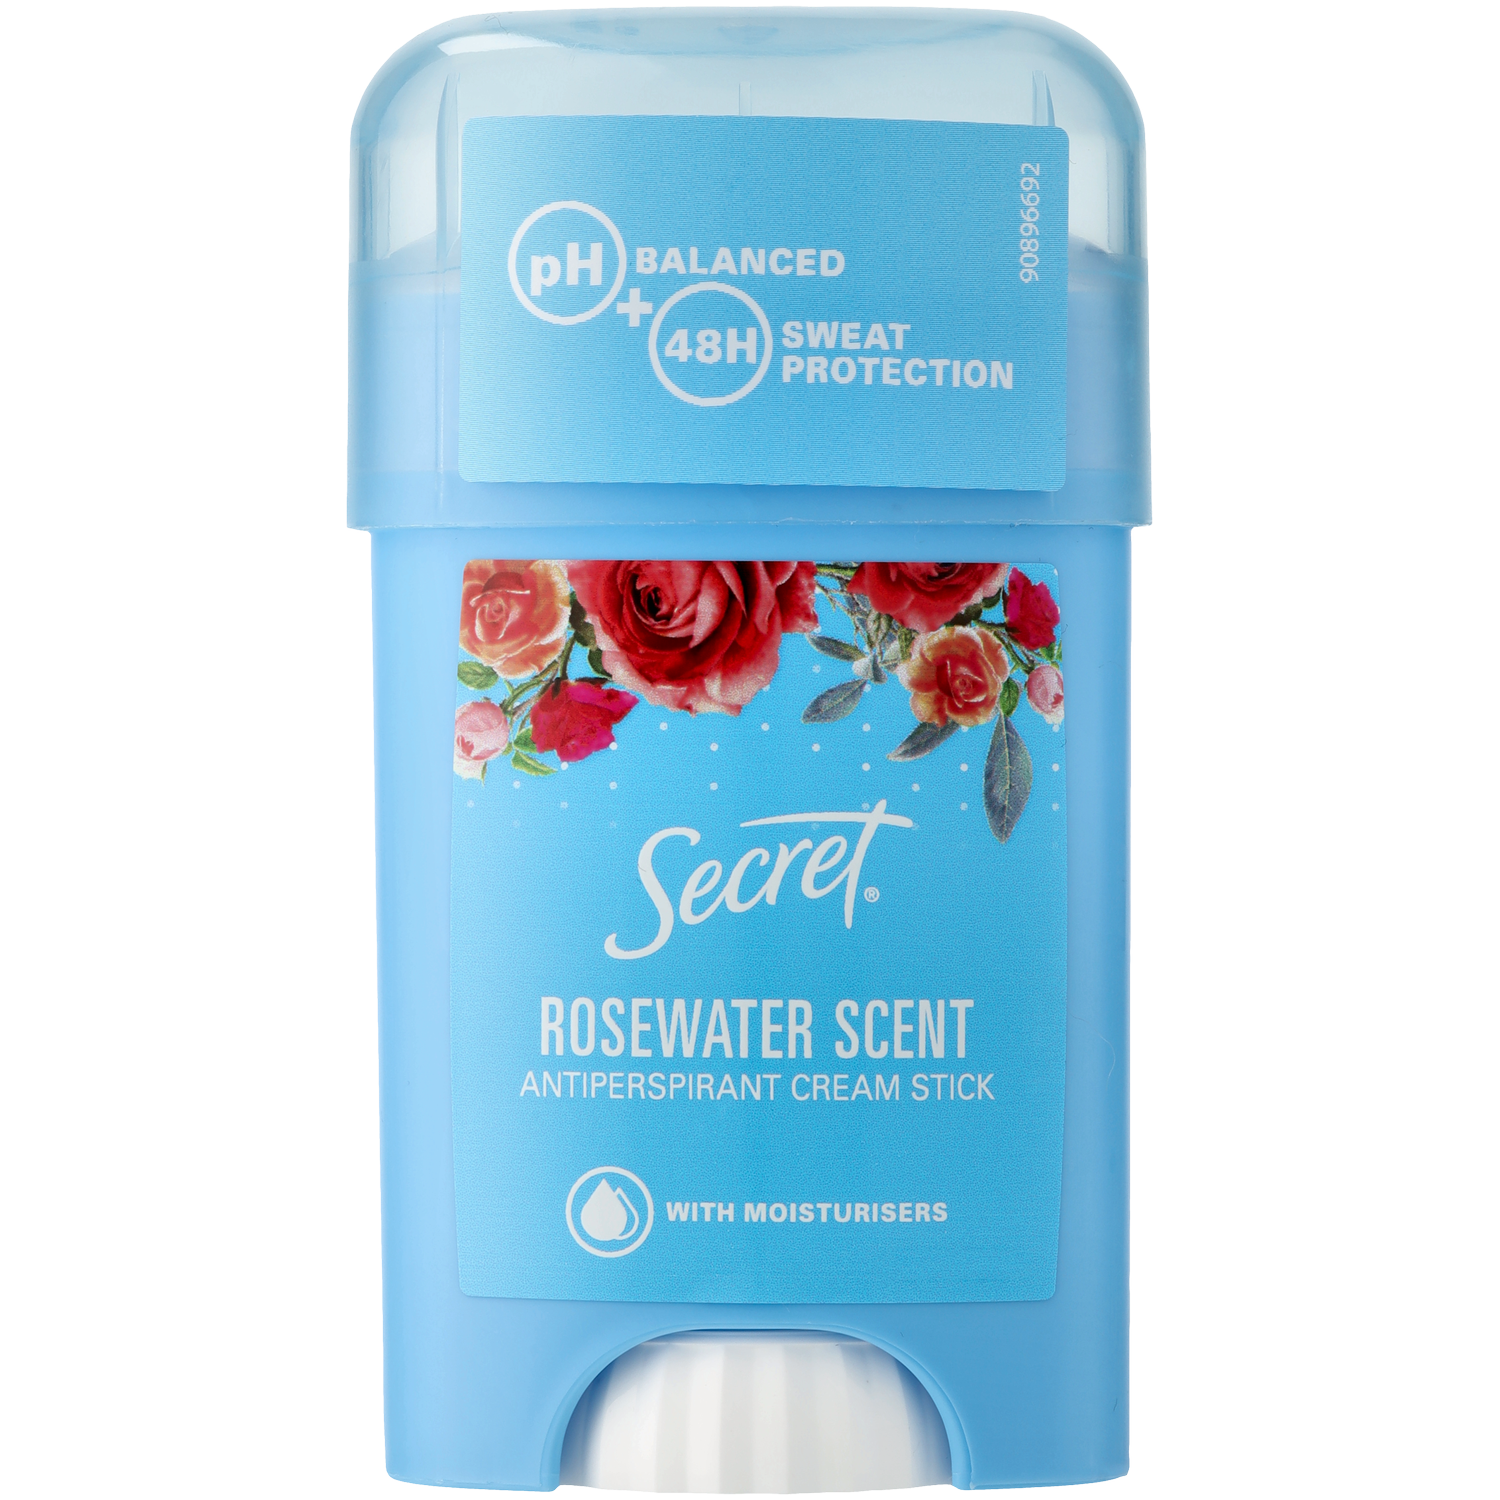 Secret Rosewater Scent крем-антиперспирант для женщин, 40 мл антиперспирант стик secret rosewater scent 40 мл